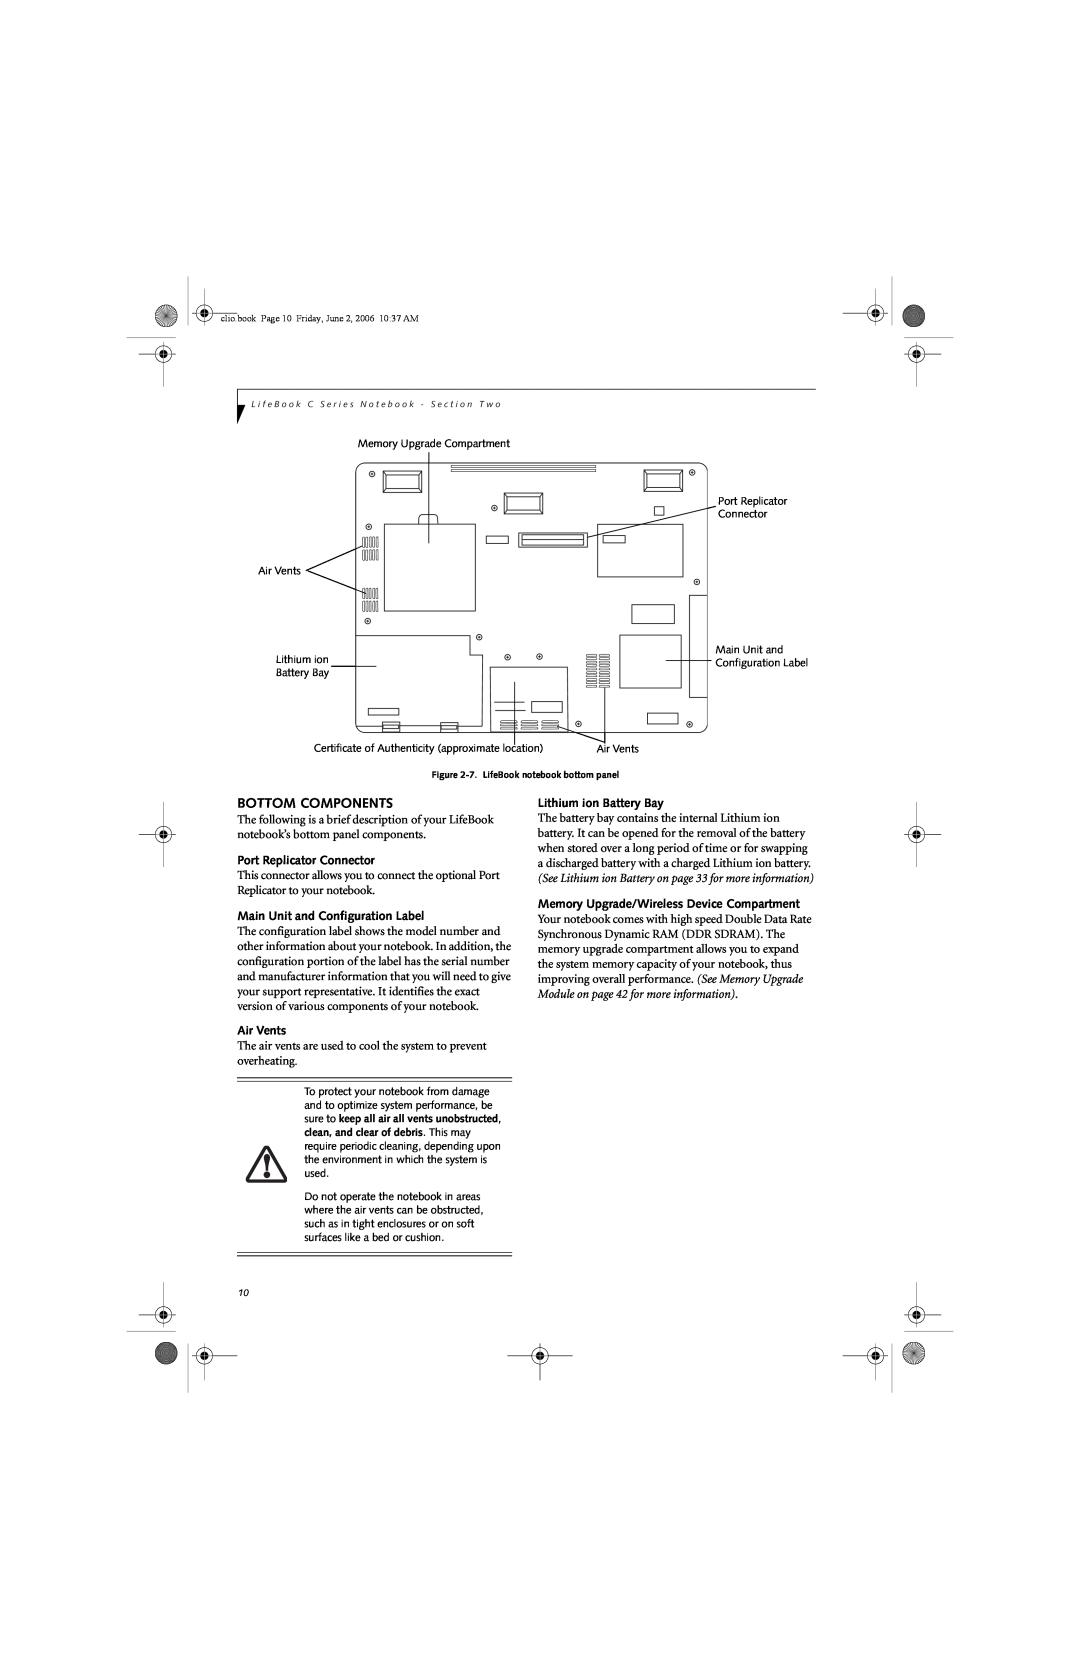 Fujitsu C1410 manual Bottom Components, Port Replicator Connector, Main Unit and Configuration Label, Air Vents 